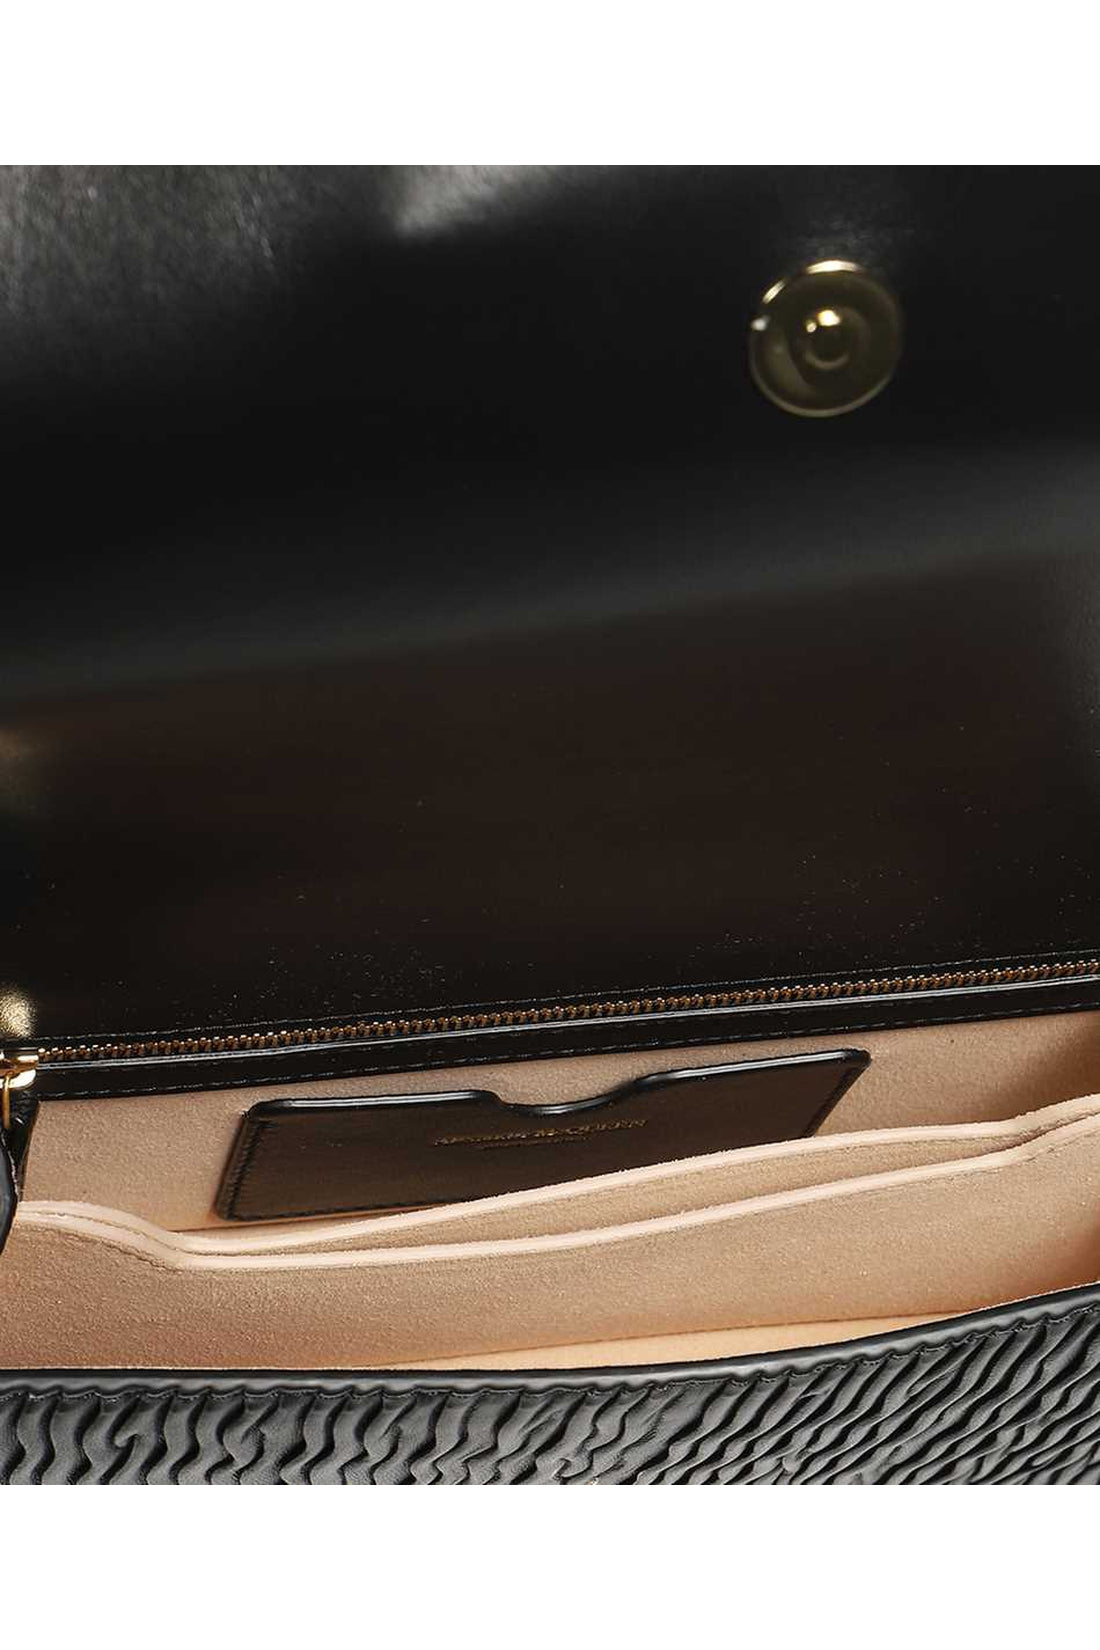 Alexander McQueen-OUTLET-SALE-Jewelled Satchel embossed leather bag-ARCHIVIST